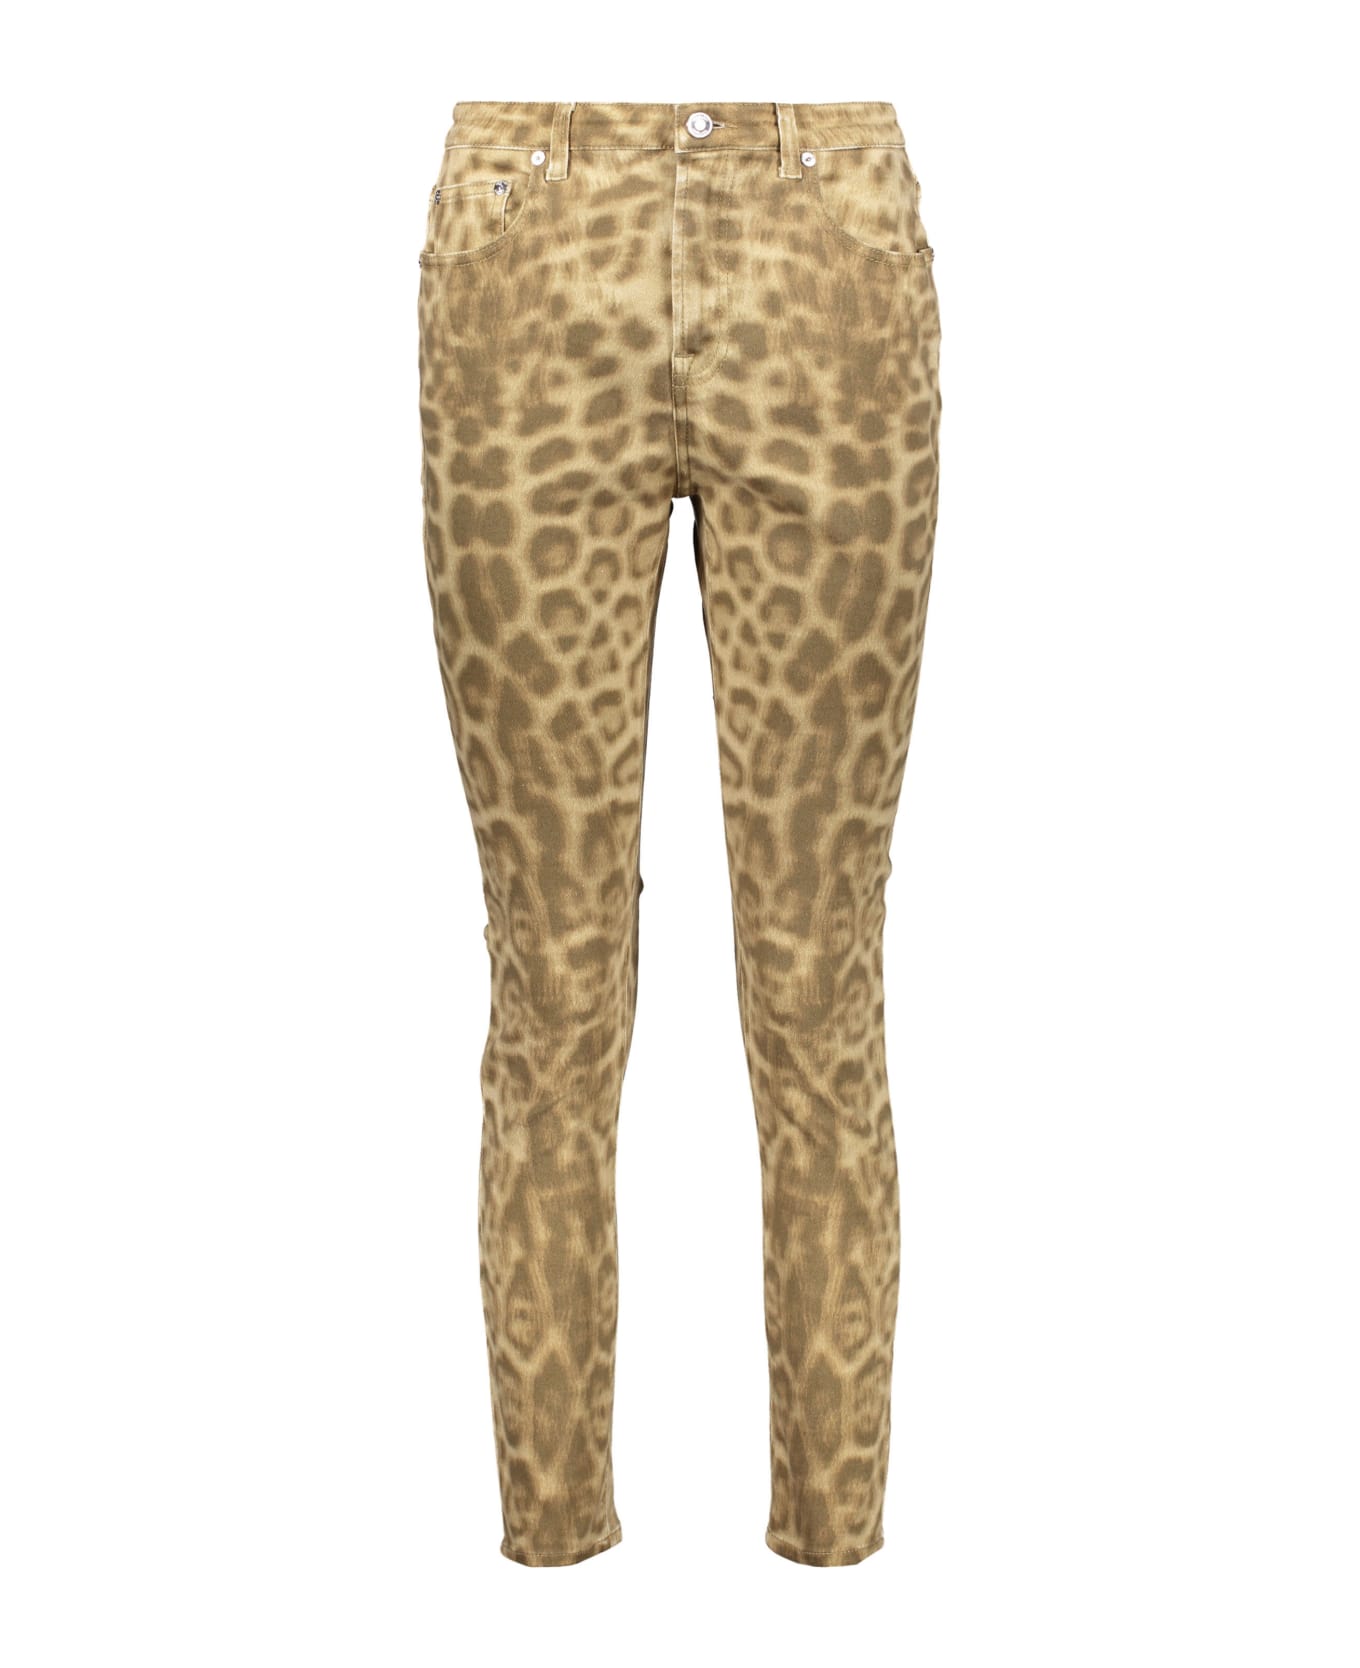 Burberry Leopard Print Skinny Jeans - Animalier